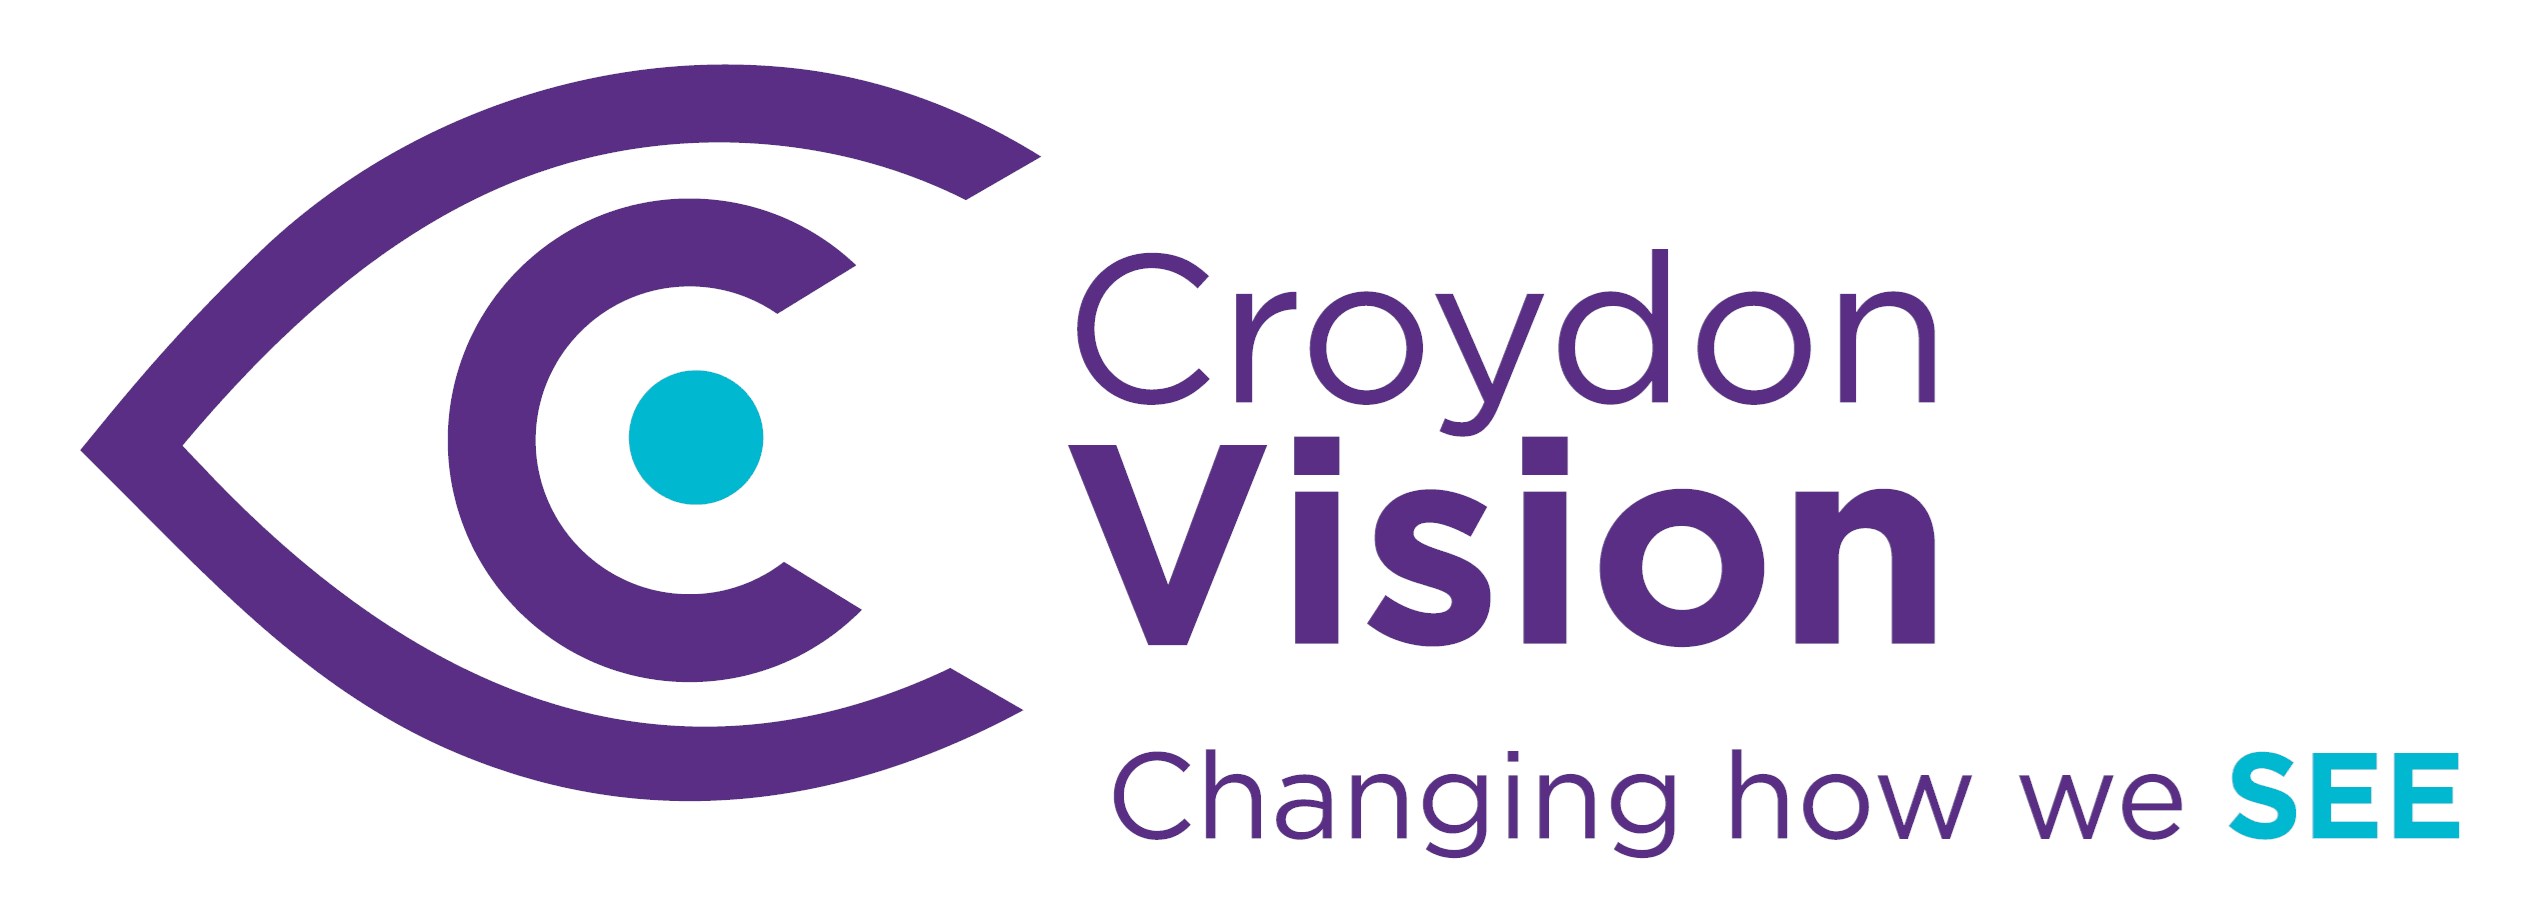 Croydon Vision